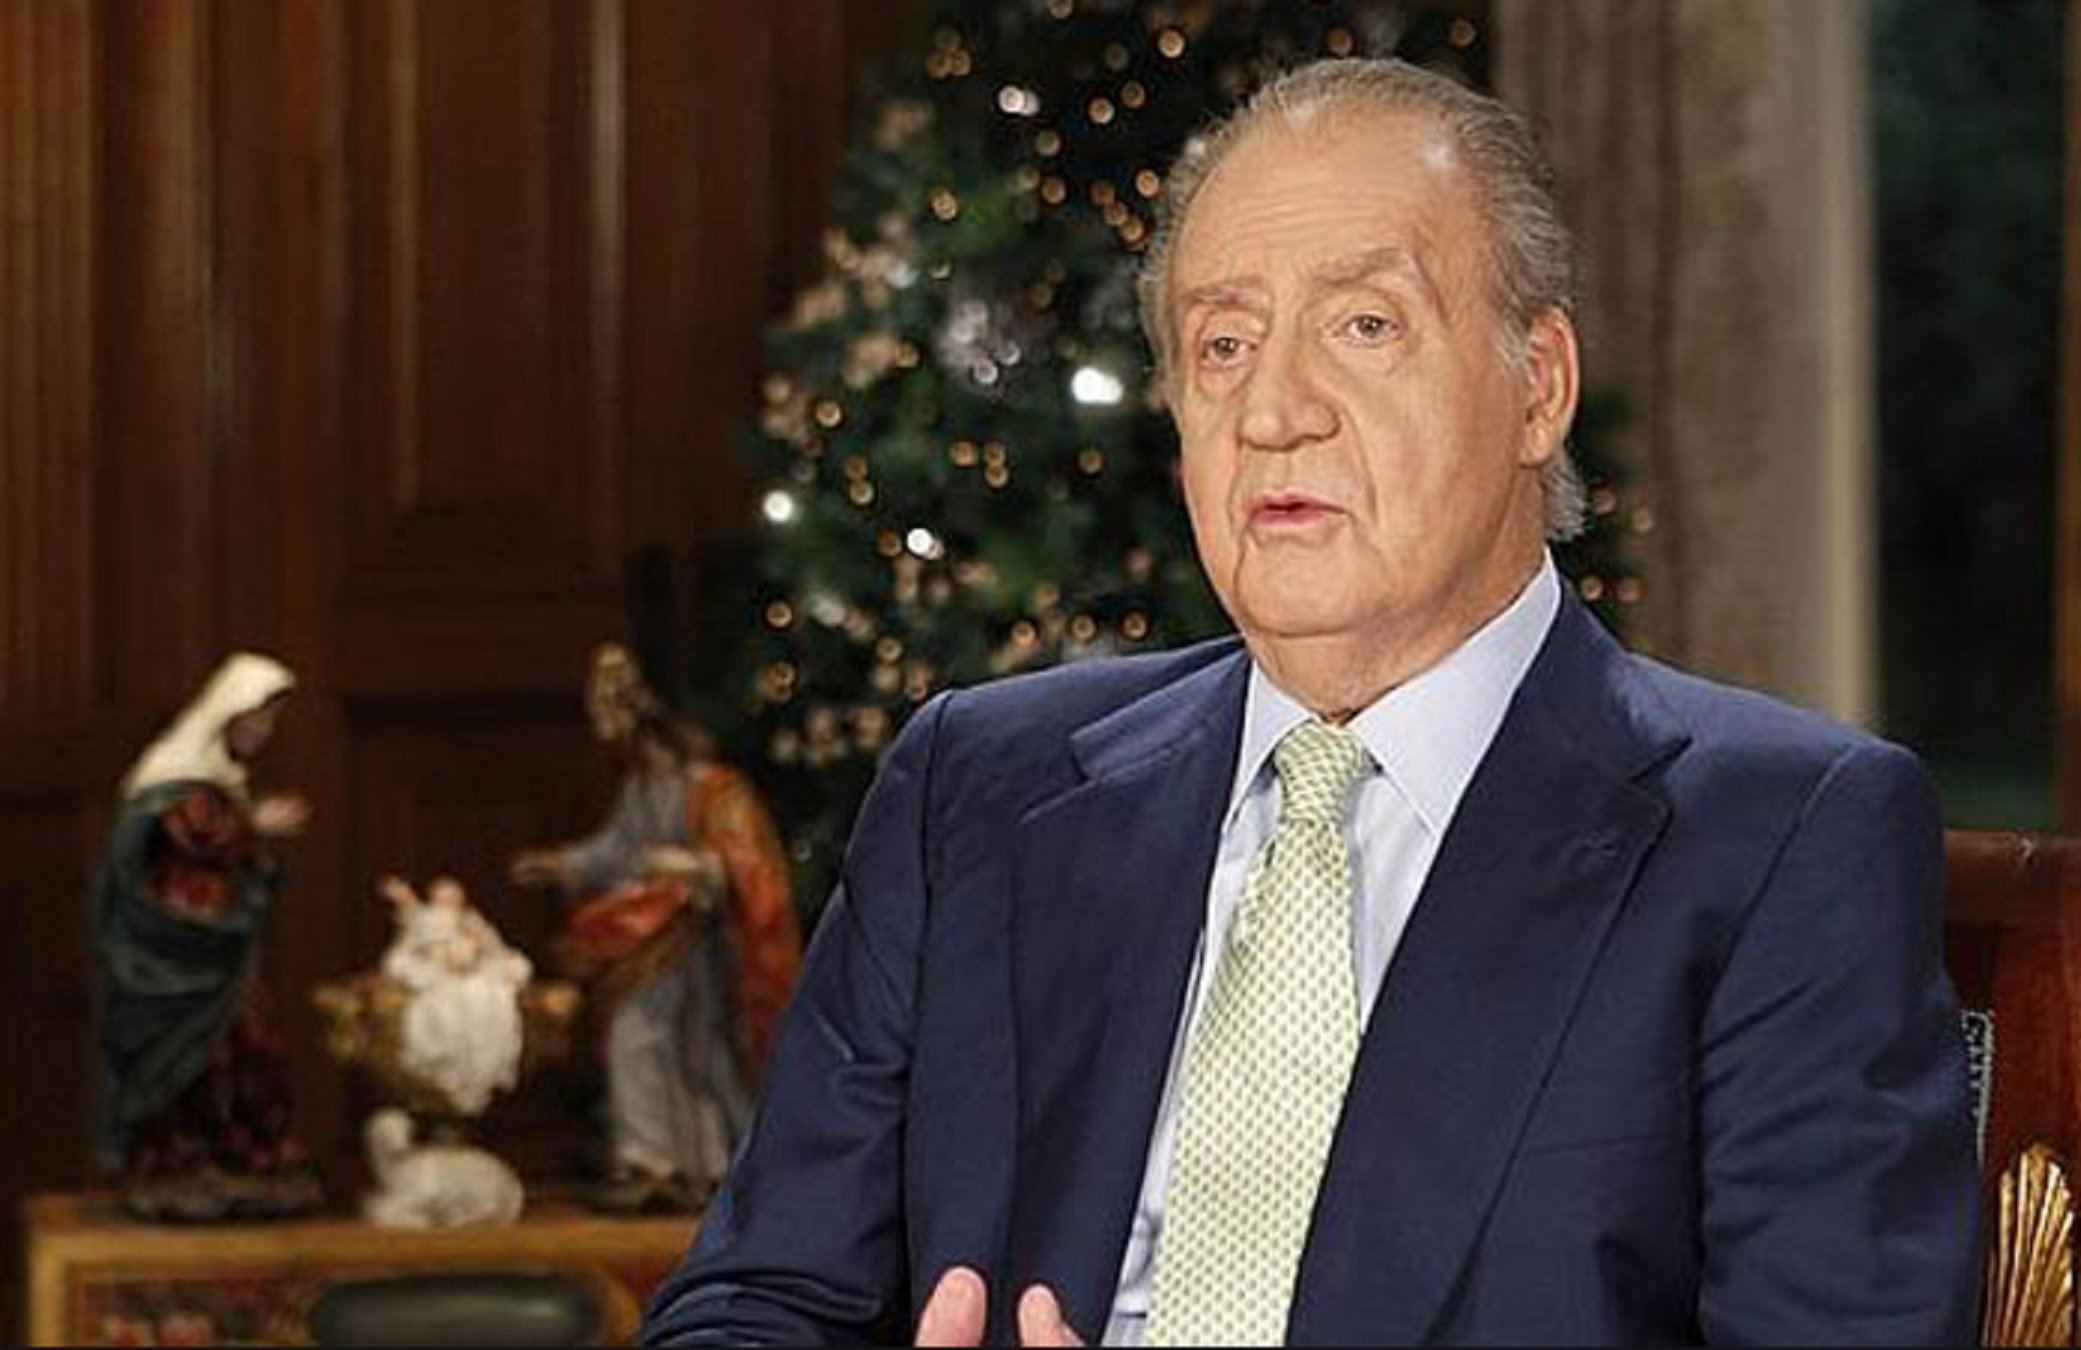 Only one Spanish public figure congratulates Juan Carlos I on his birthday